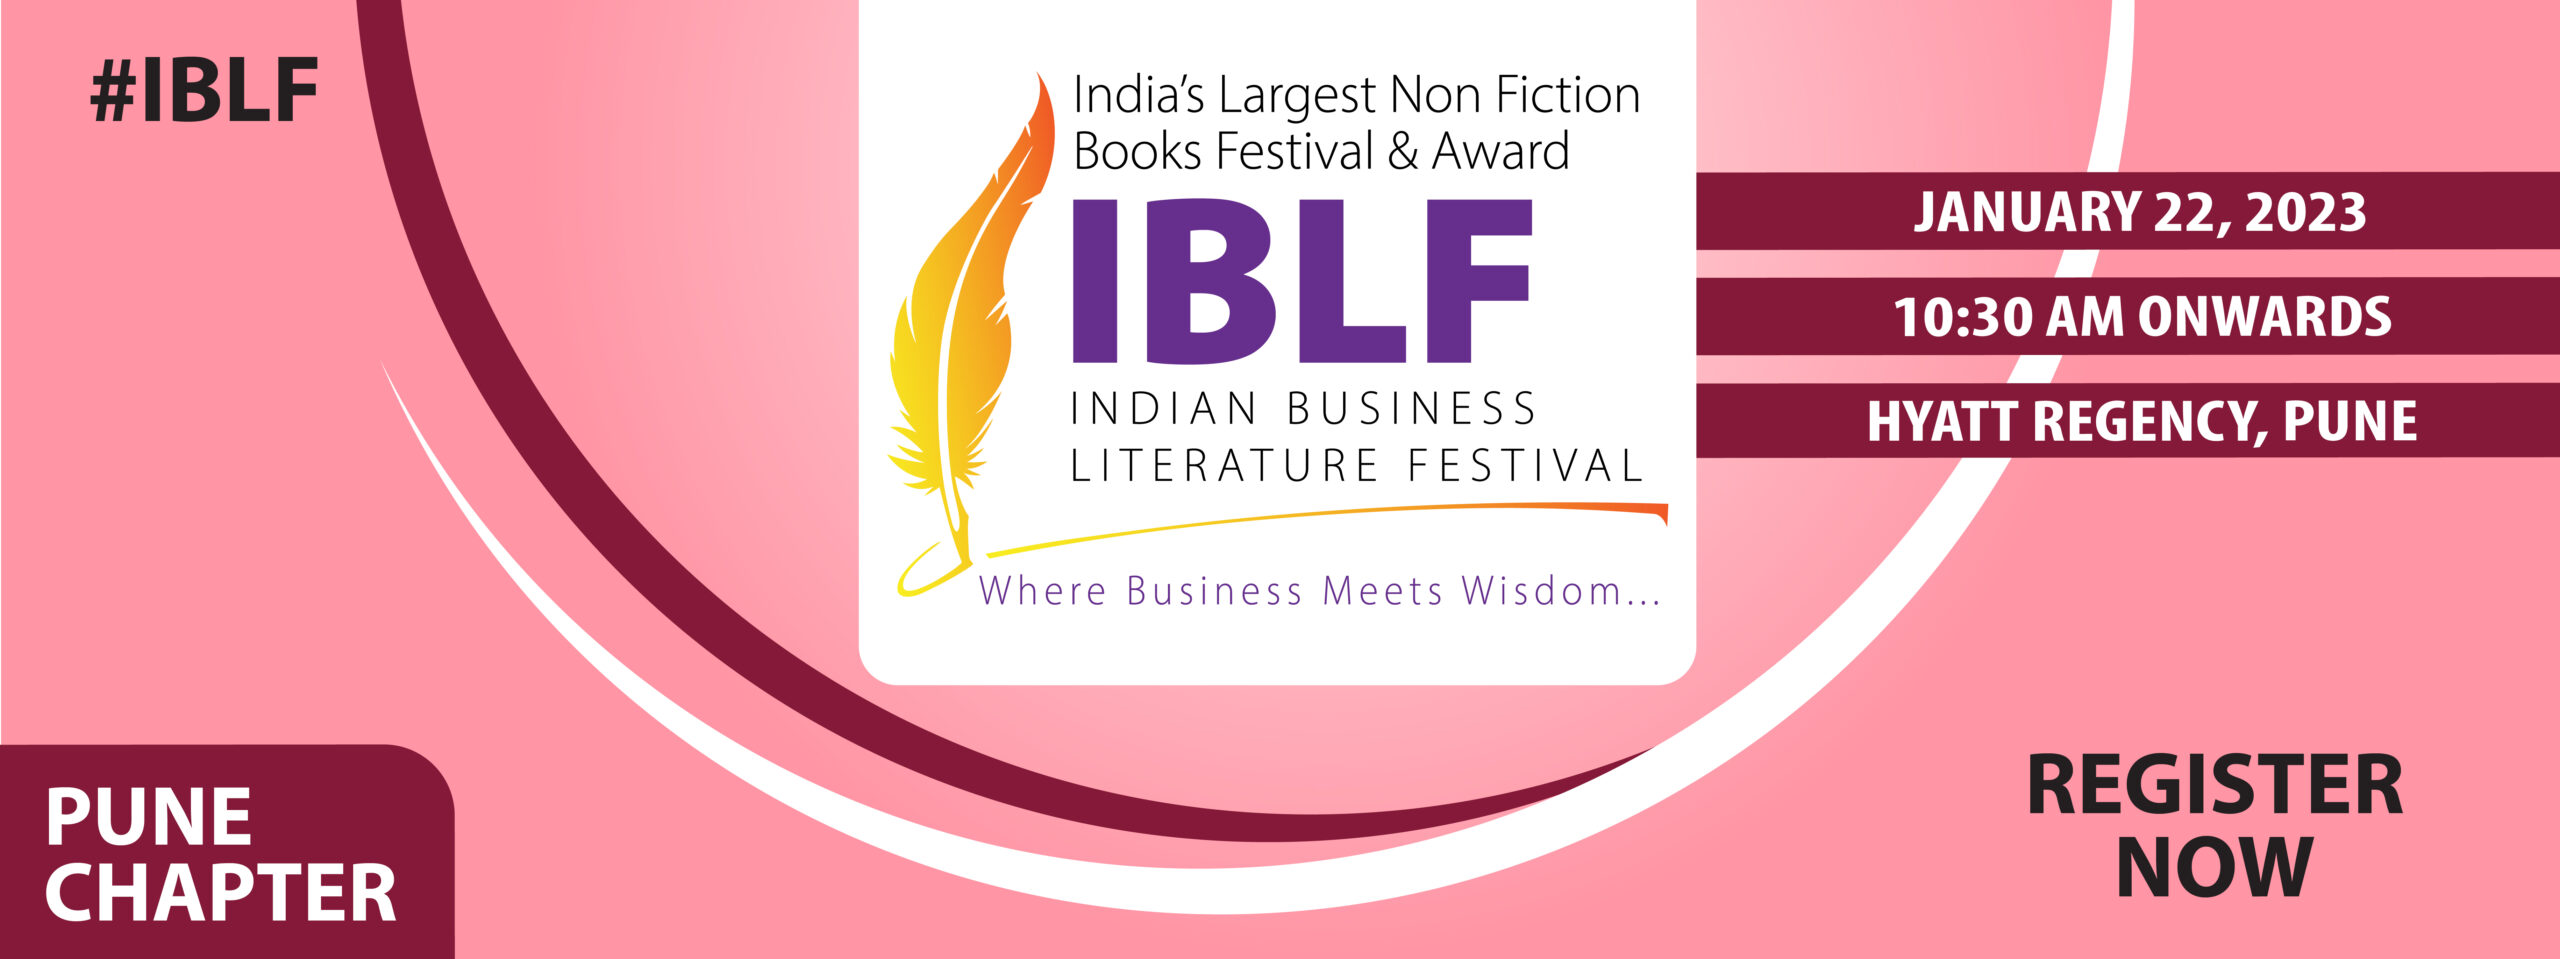 India Business Literature Festival - IBLF Pune